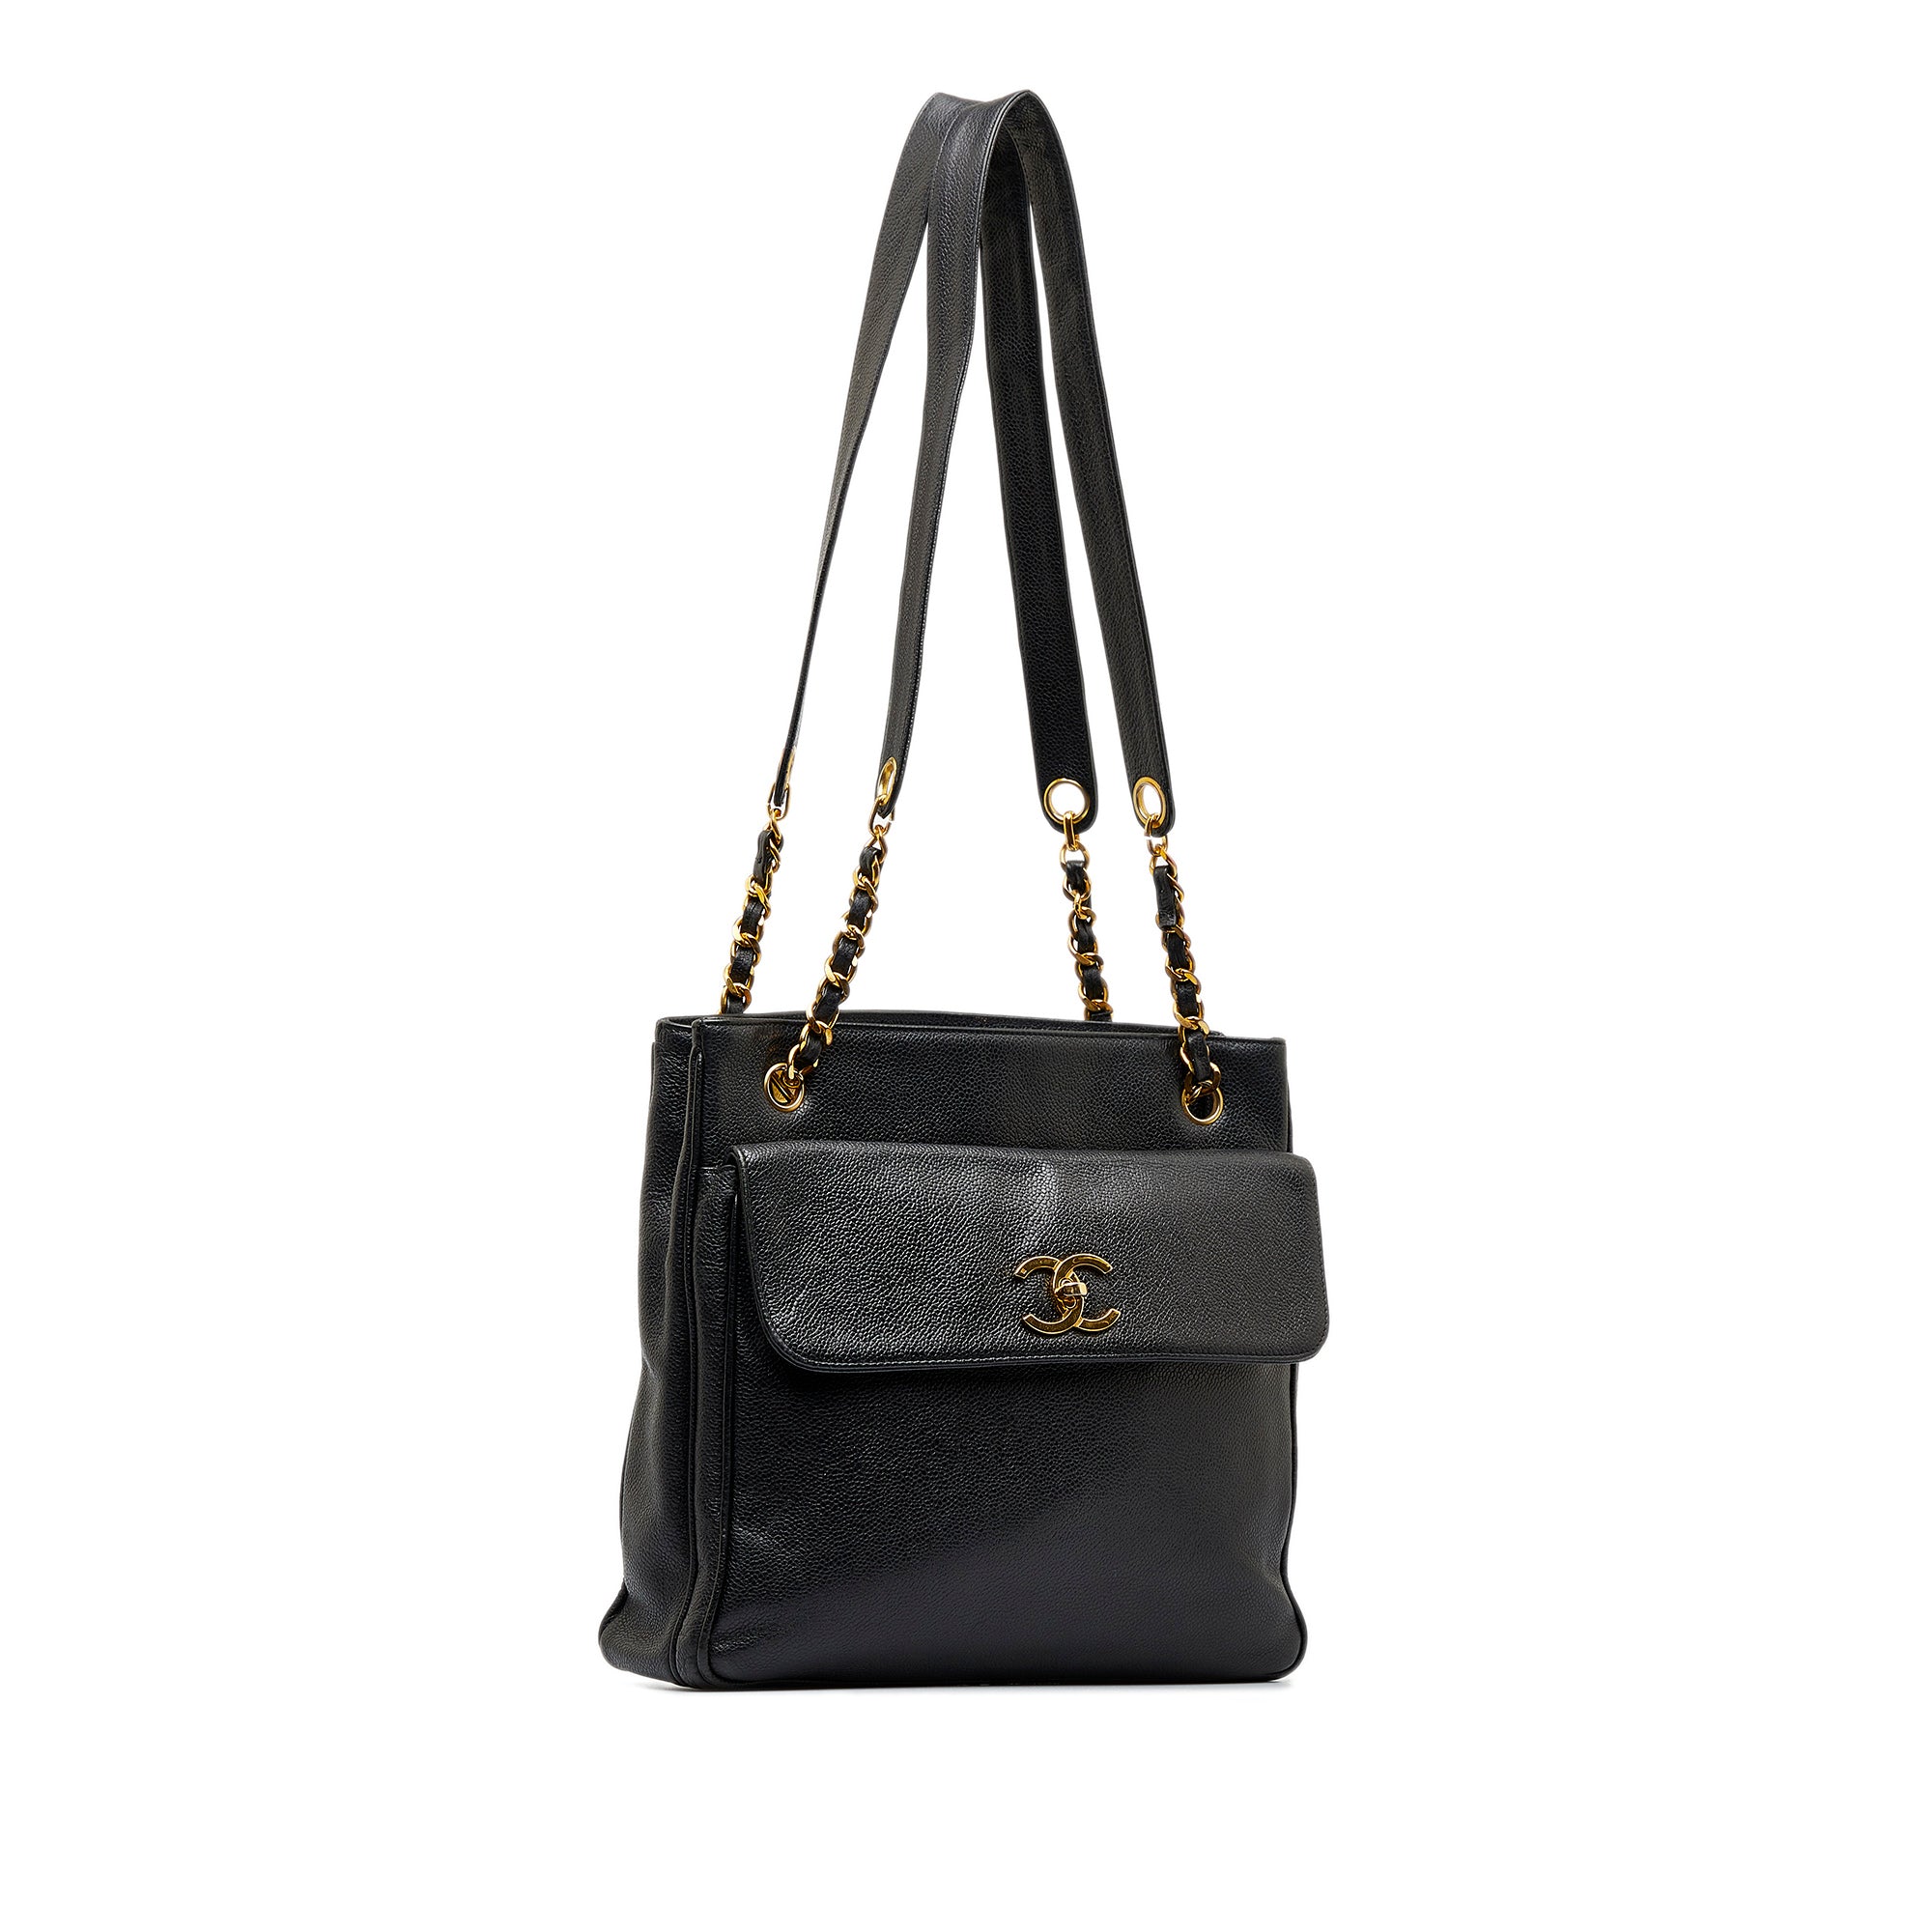 Black Chanel CC Caviar Leather Shoulder Bag